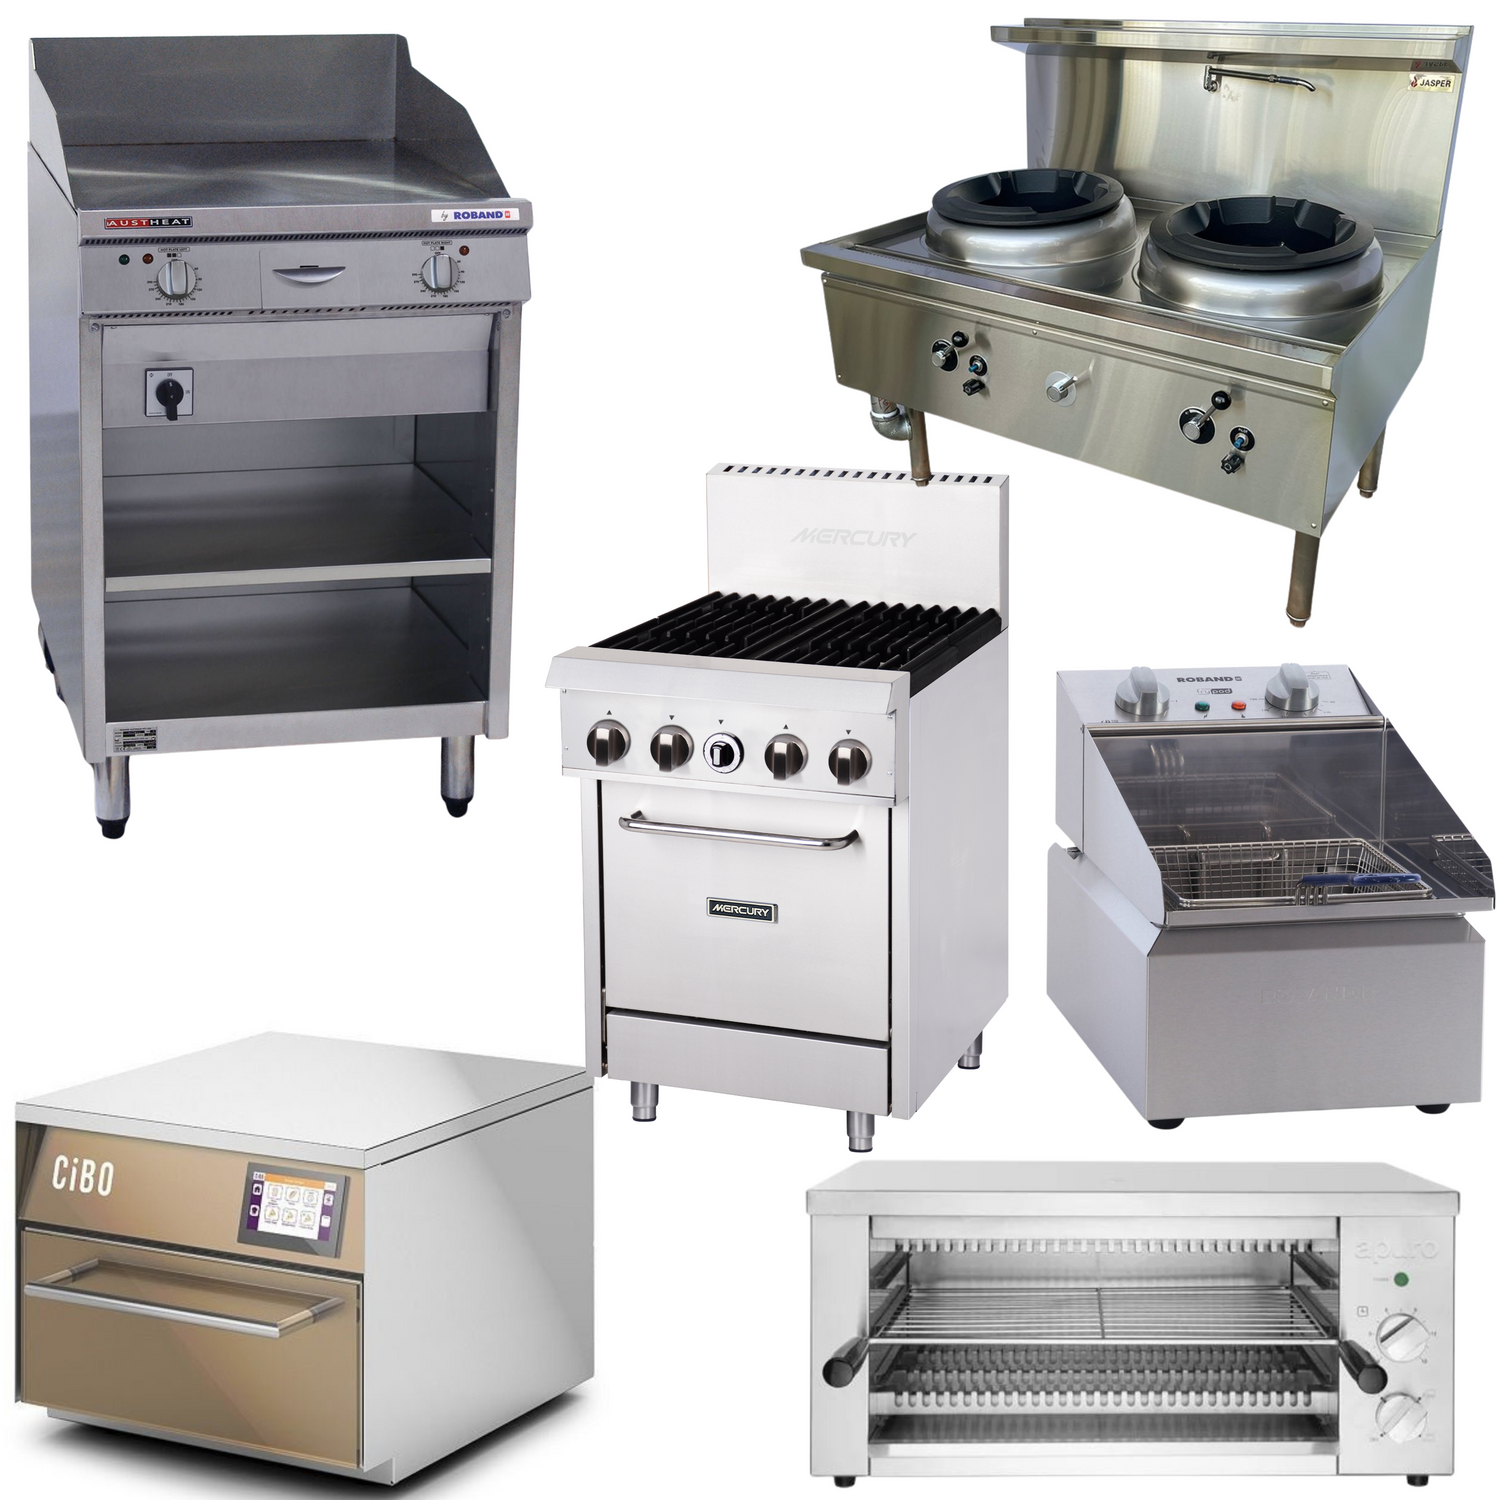 Commercial cooking equipment range